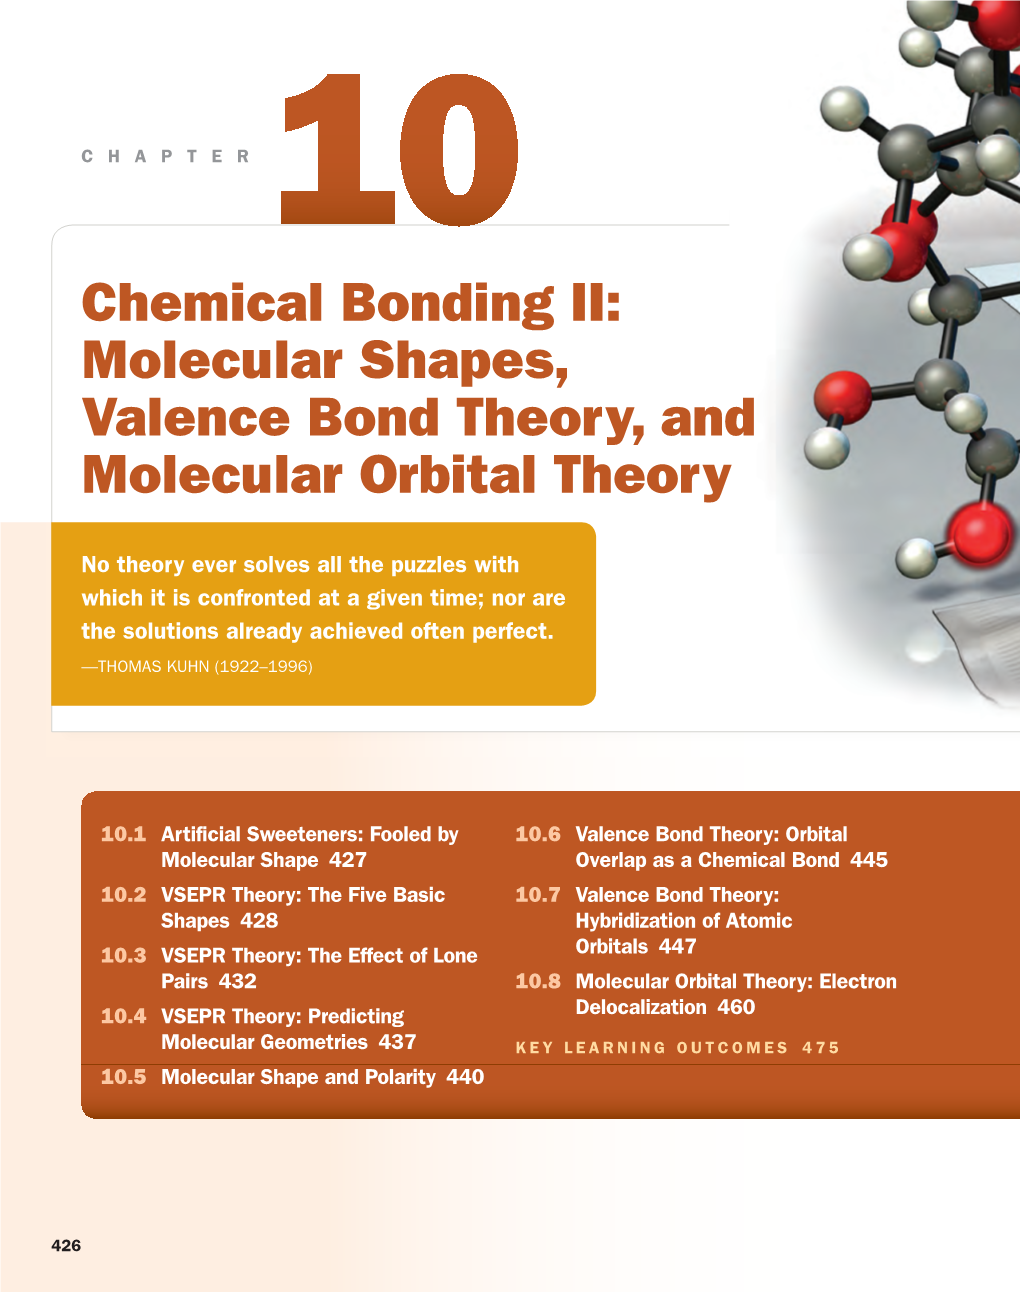 Chemical Bonding II: Molecular Shapes, Valence Bond Theory, and Molecular Orbital Theory